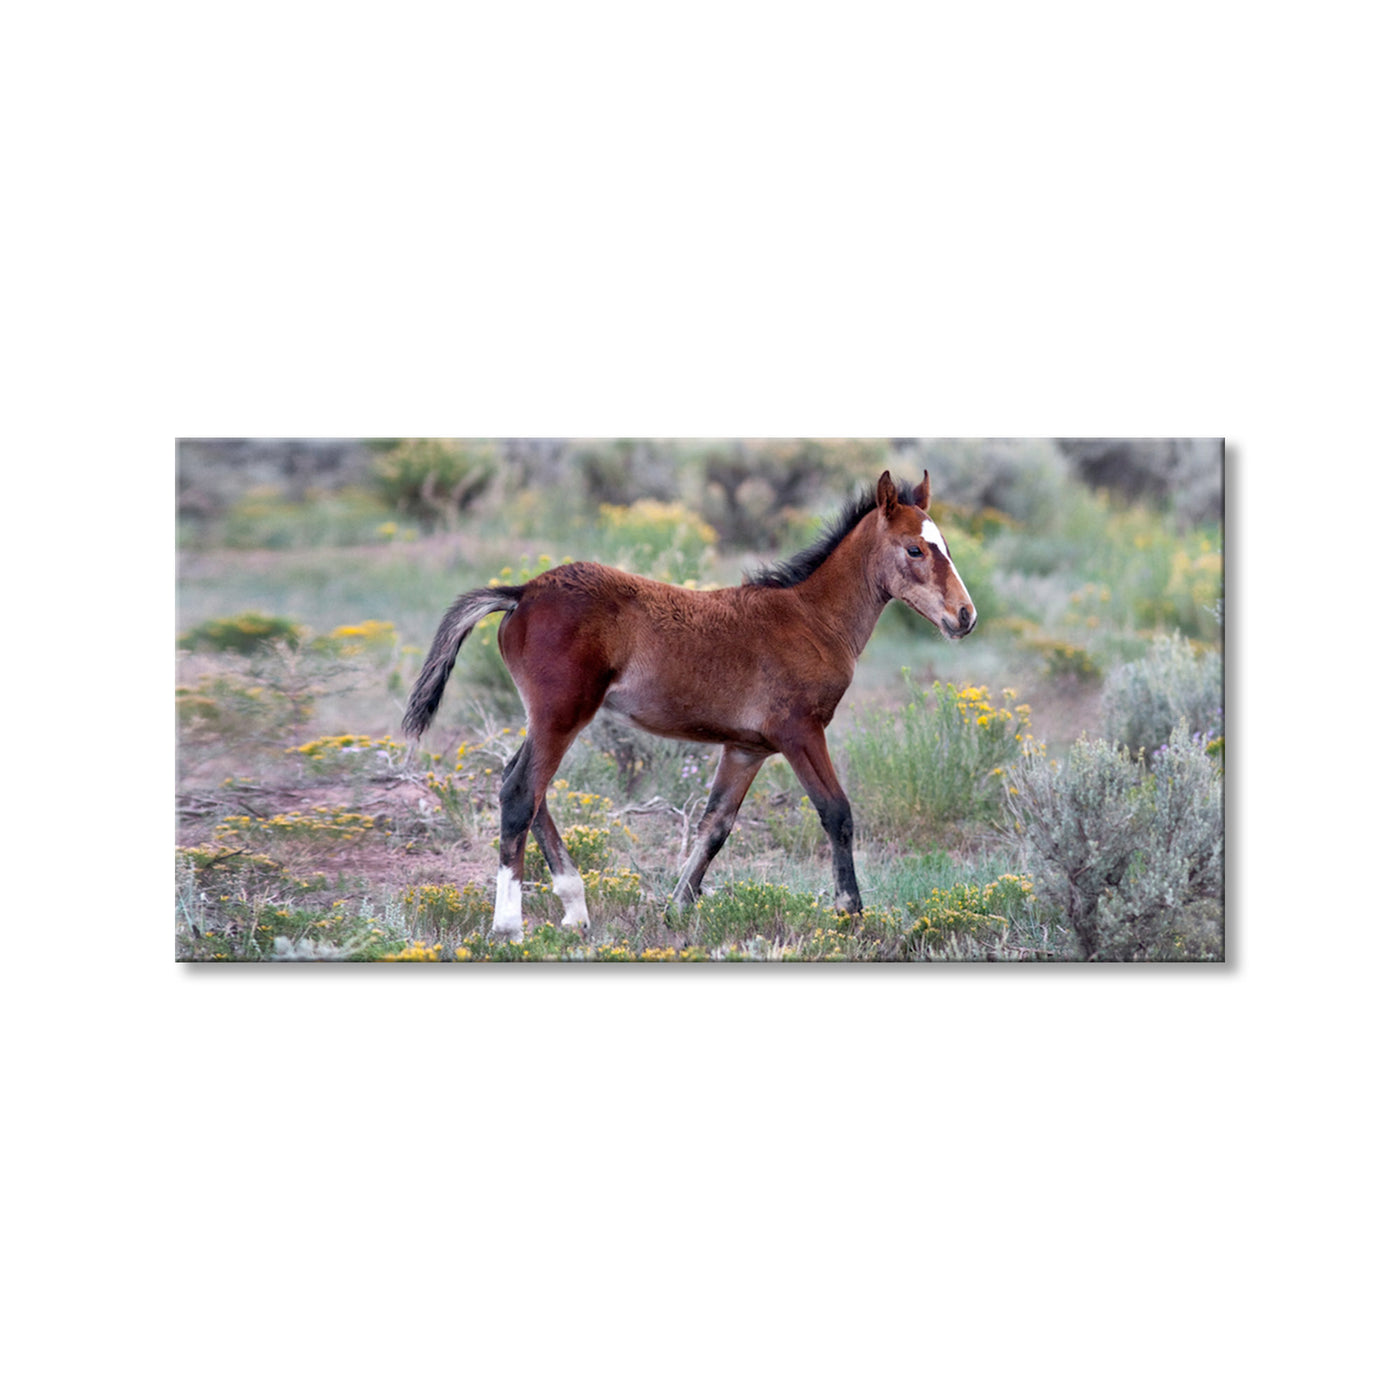 Mustang Foal